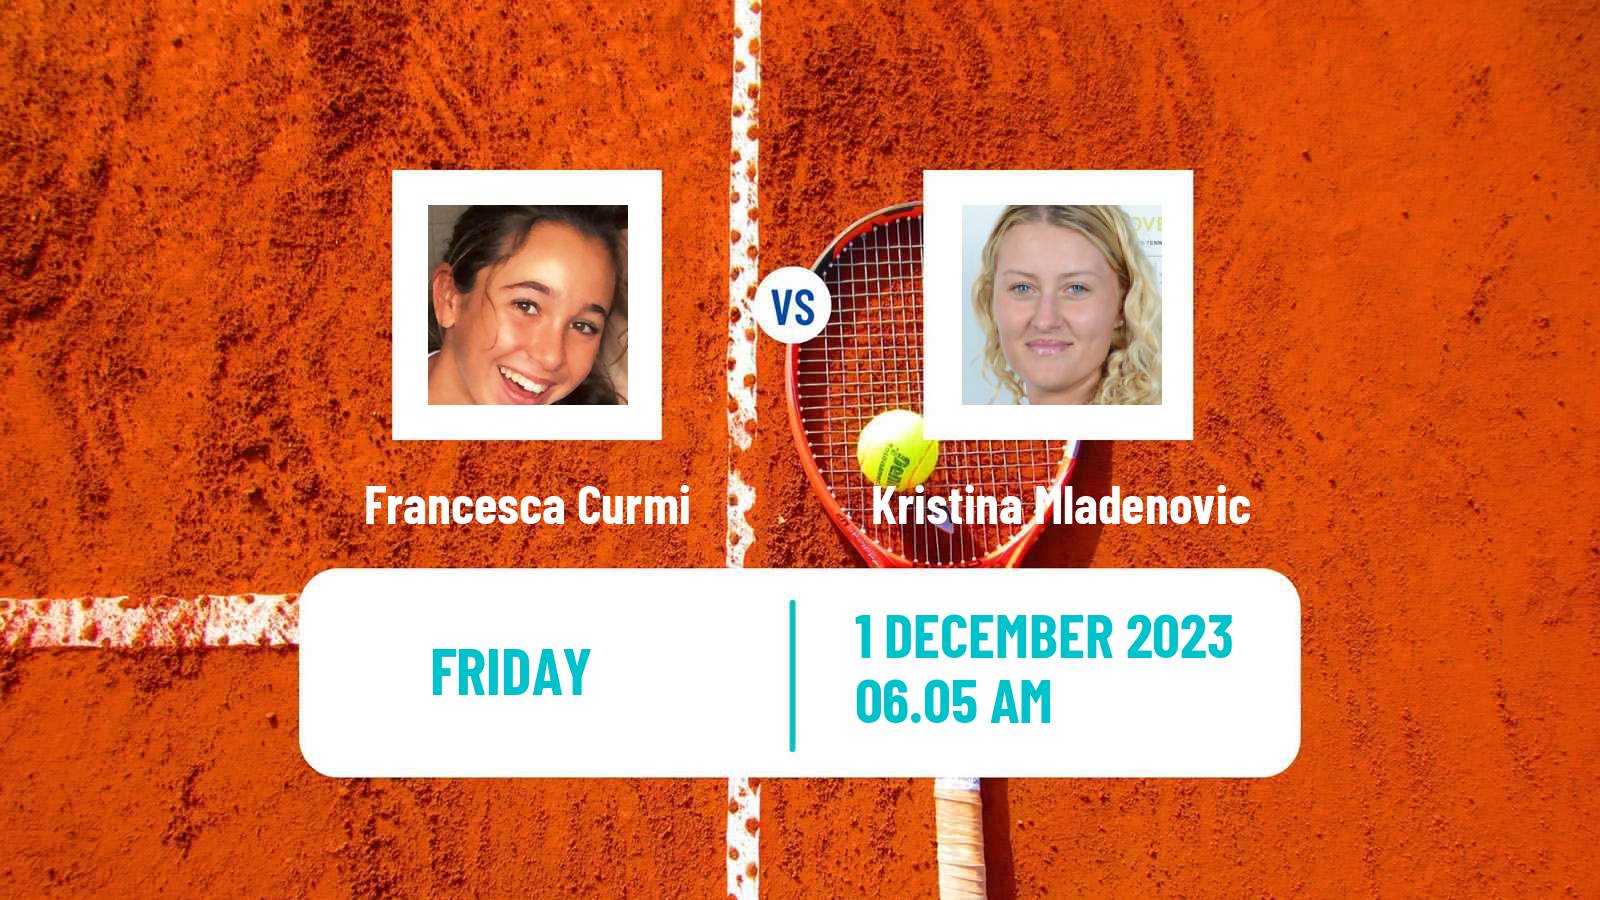 Tennis ITF W60 Trnava 3 Women Francesca Curmi - Kristina Mladenovic